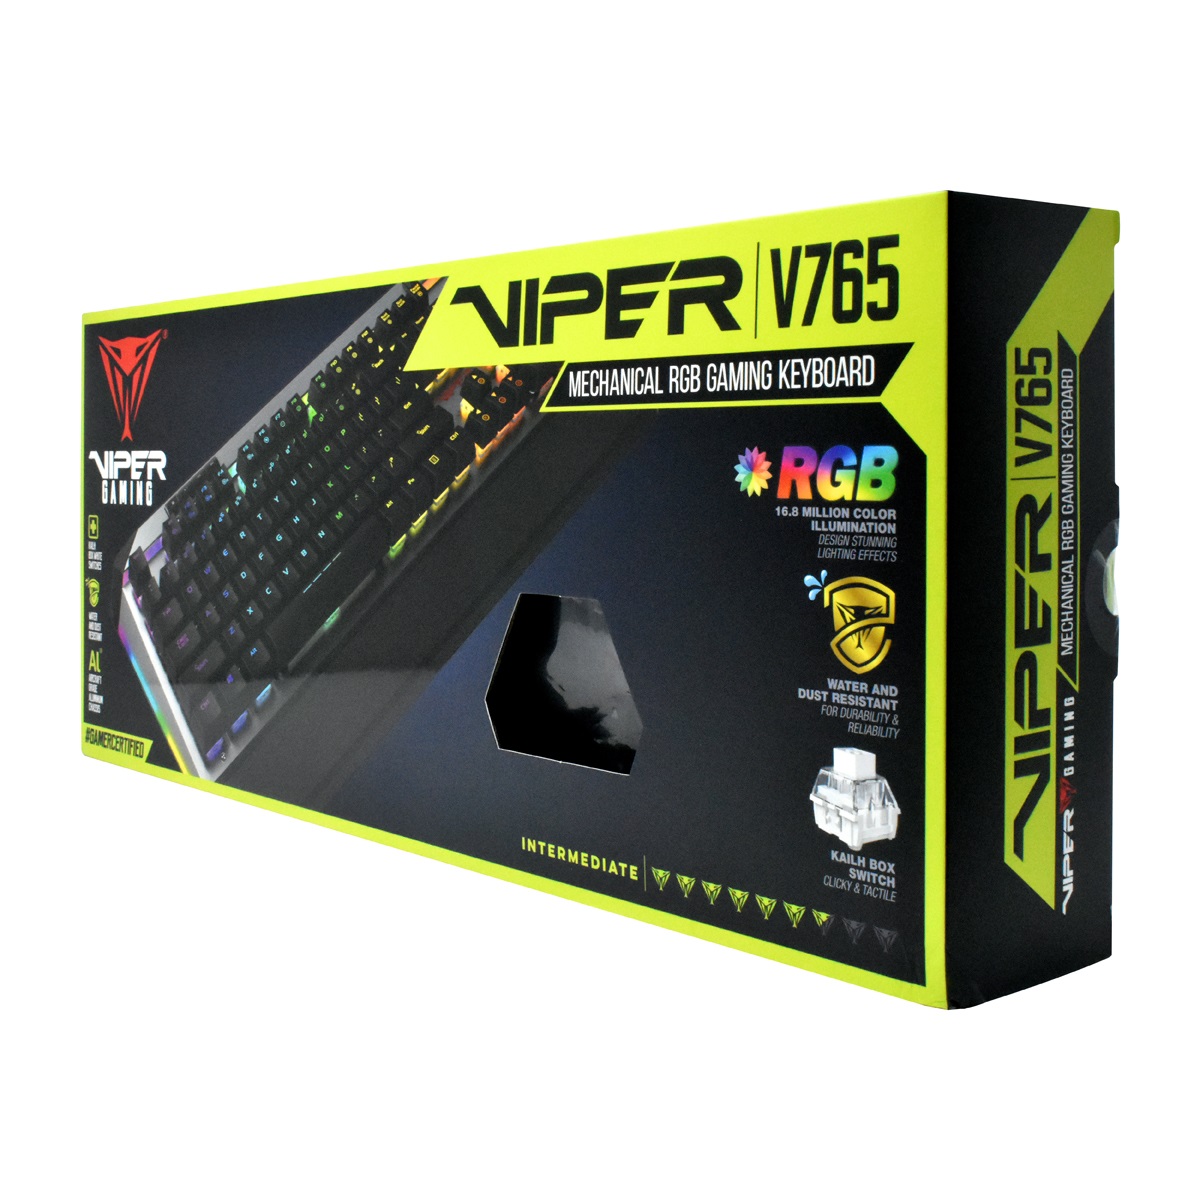 Obrázek Patriot Viper 765 herní mech. RGB klávesnice RU